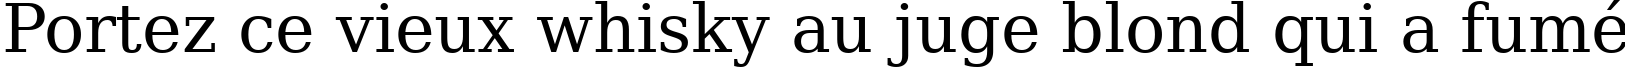 Пример написания шрифтом ae_AlMohanad текста на французском